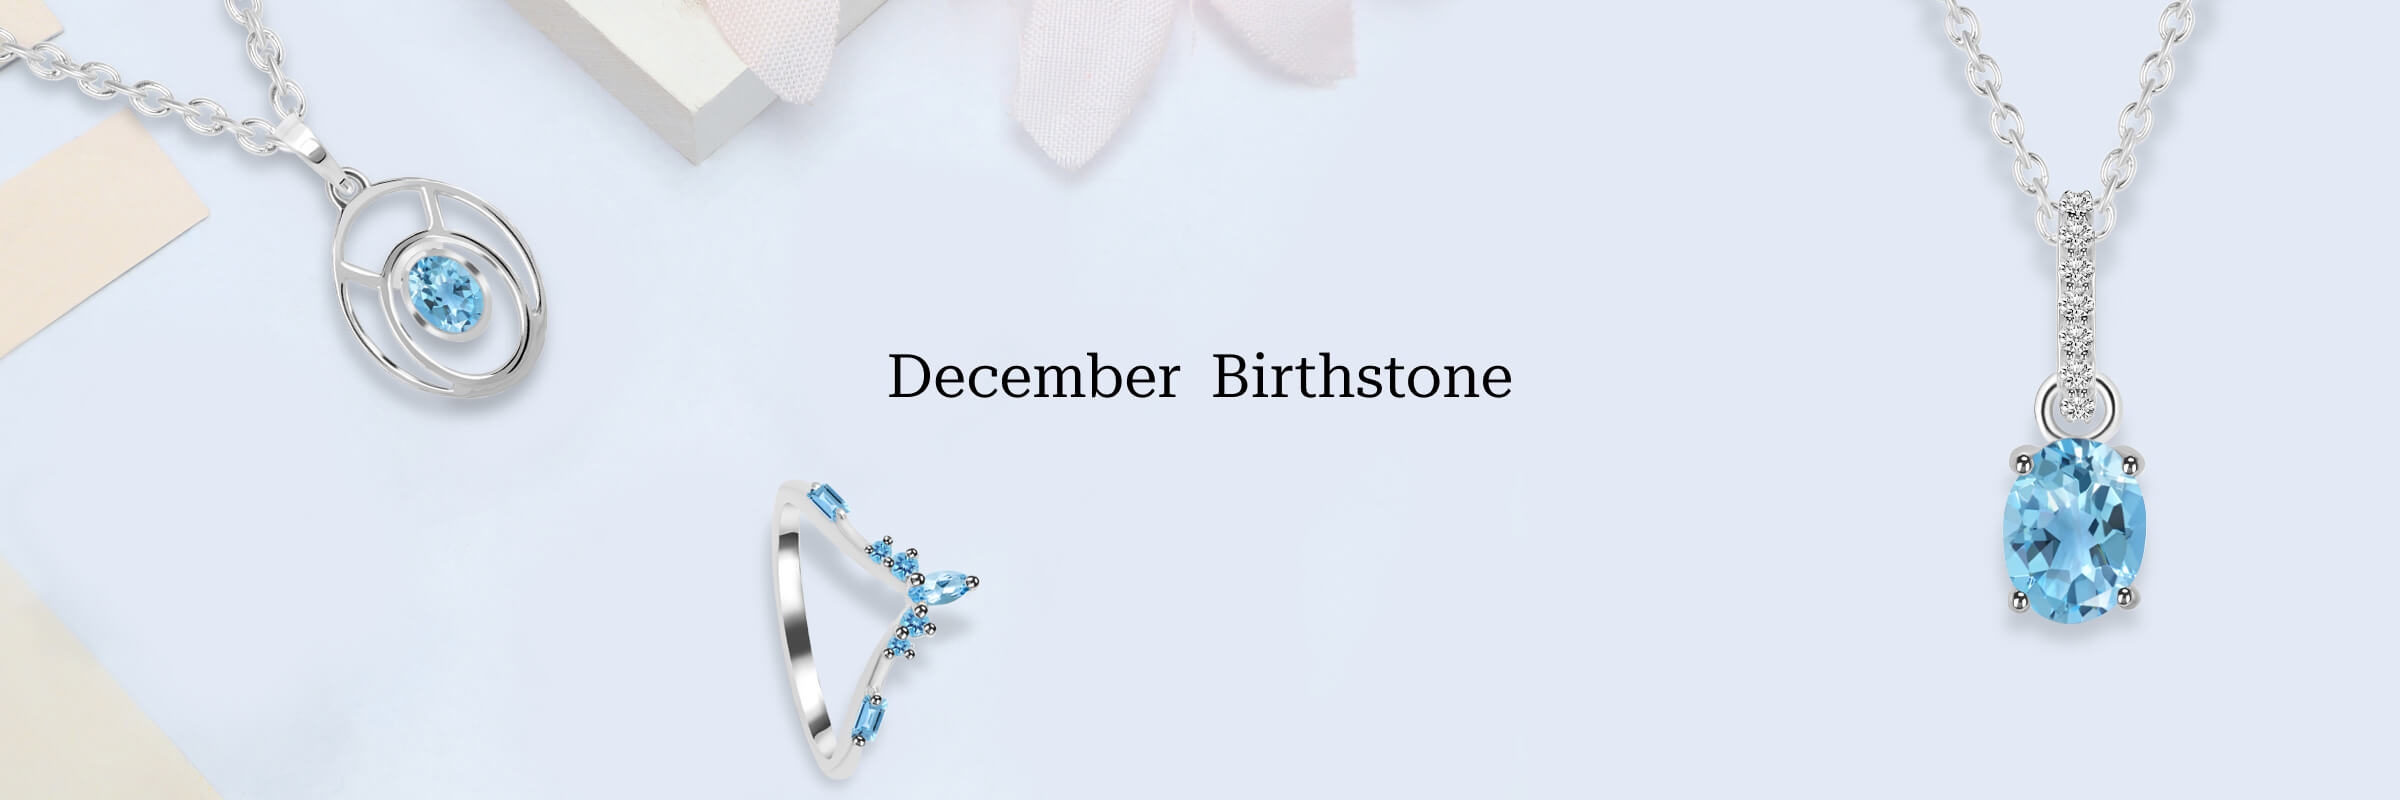 December Birthstone